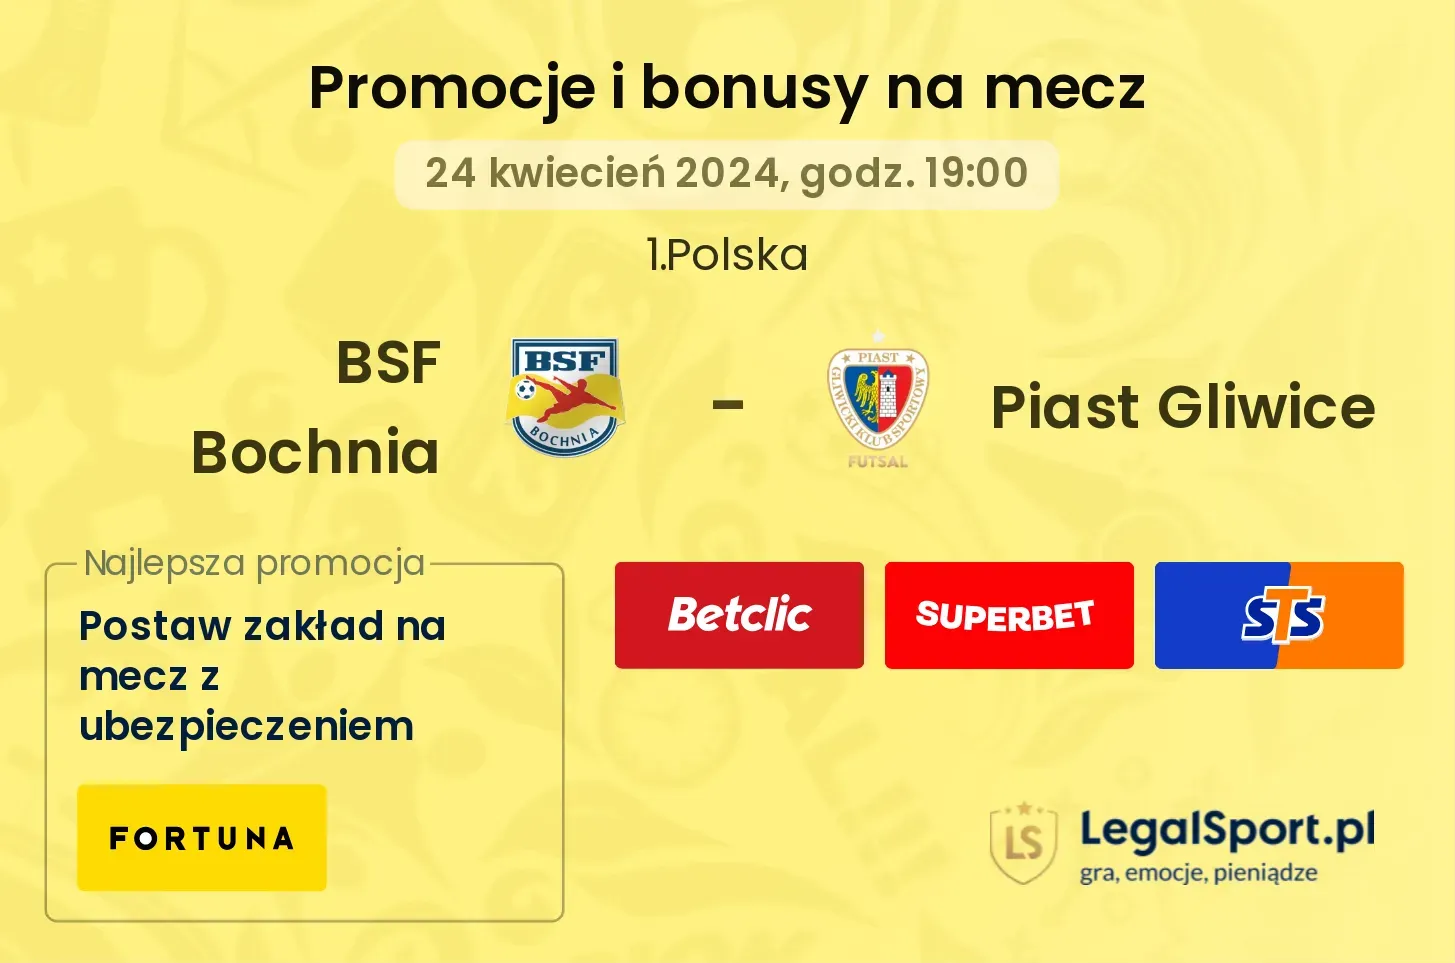 BSF Bochnia - Piast Gliwice promocje bonusy na mecz